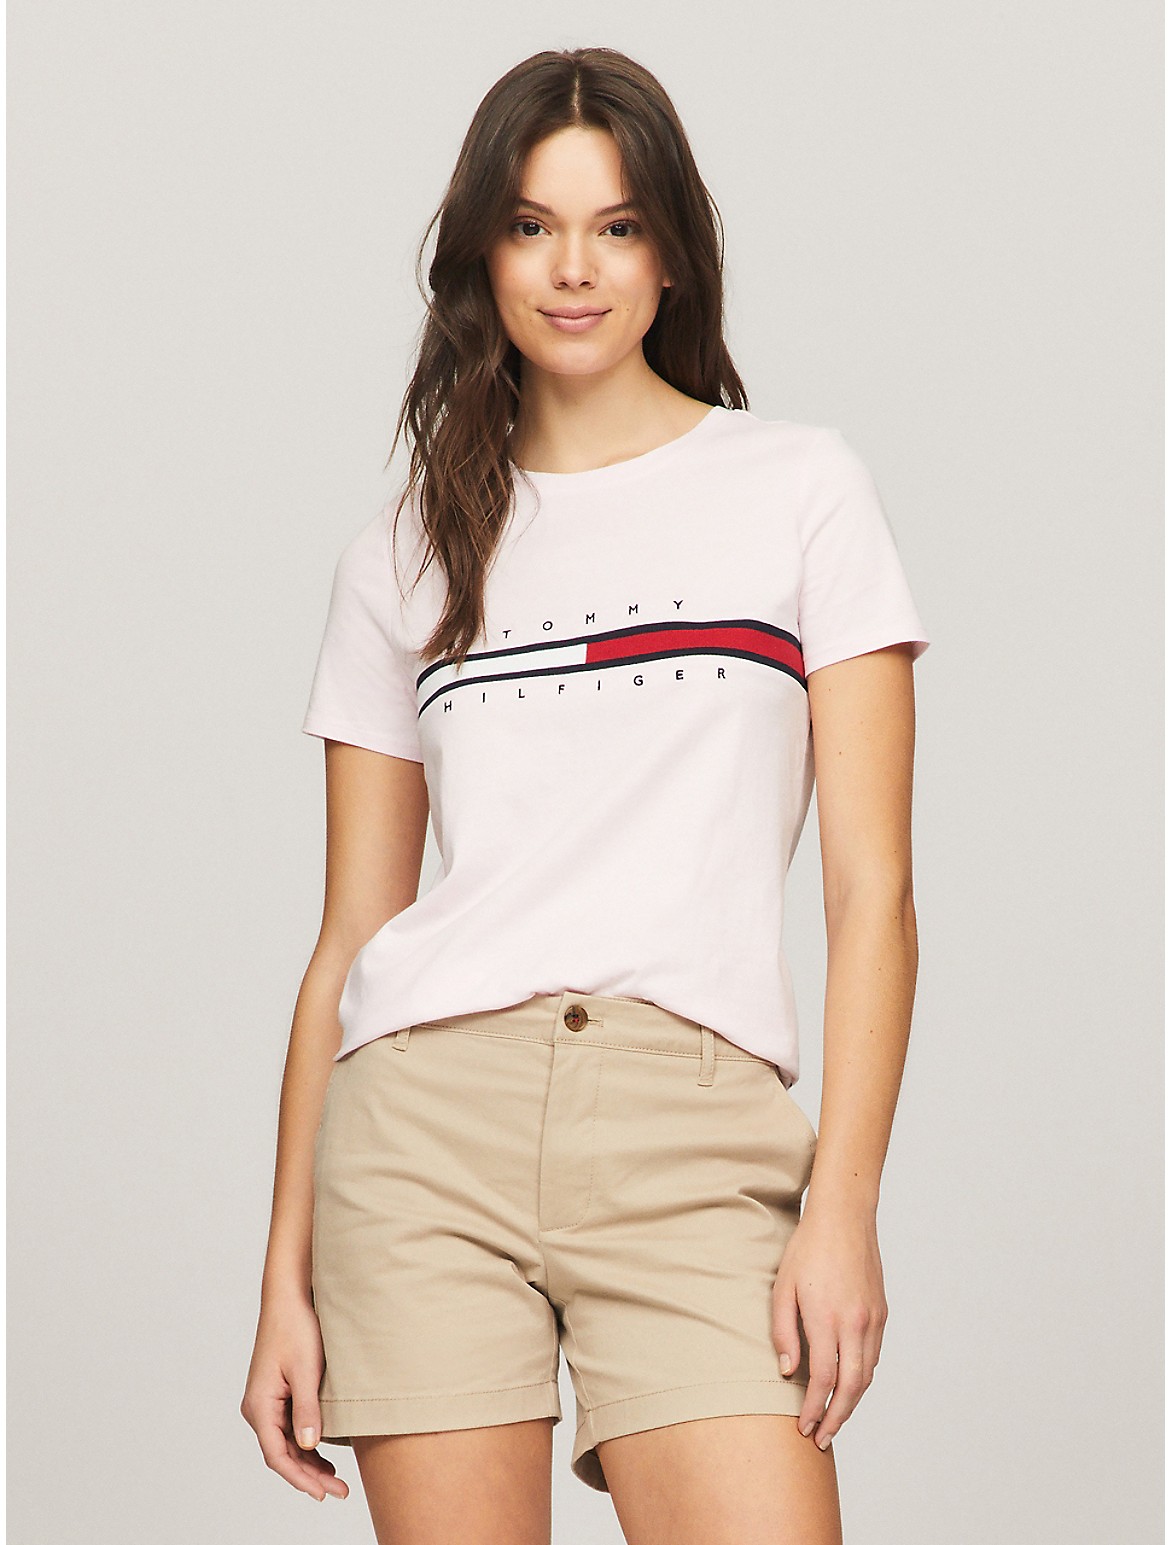 Tommy Hilfiger Women's Embroidered Flag Stripe Logo T-Shirt